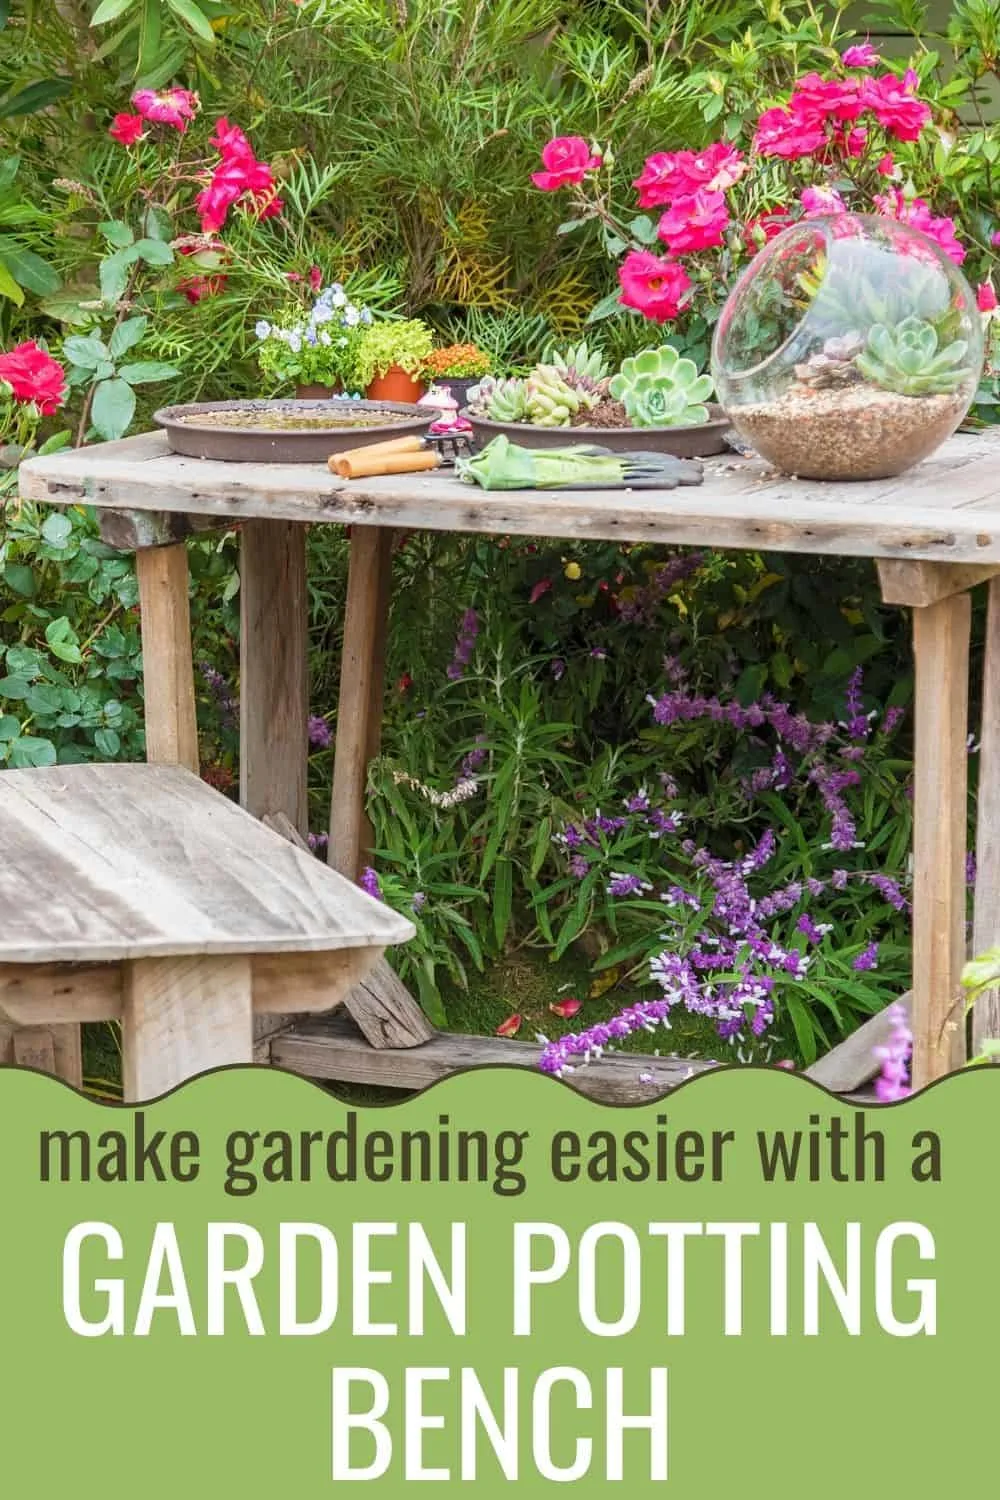 Make gardening easier with a garden potting bench